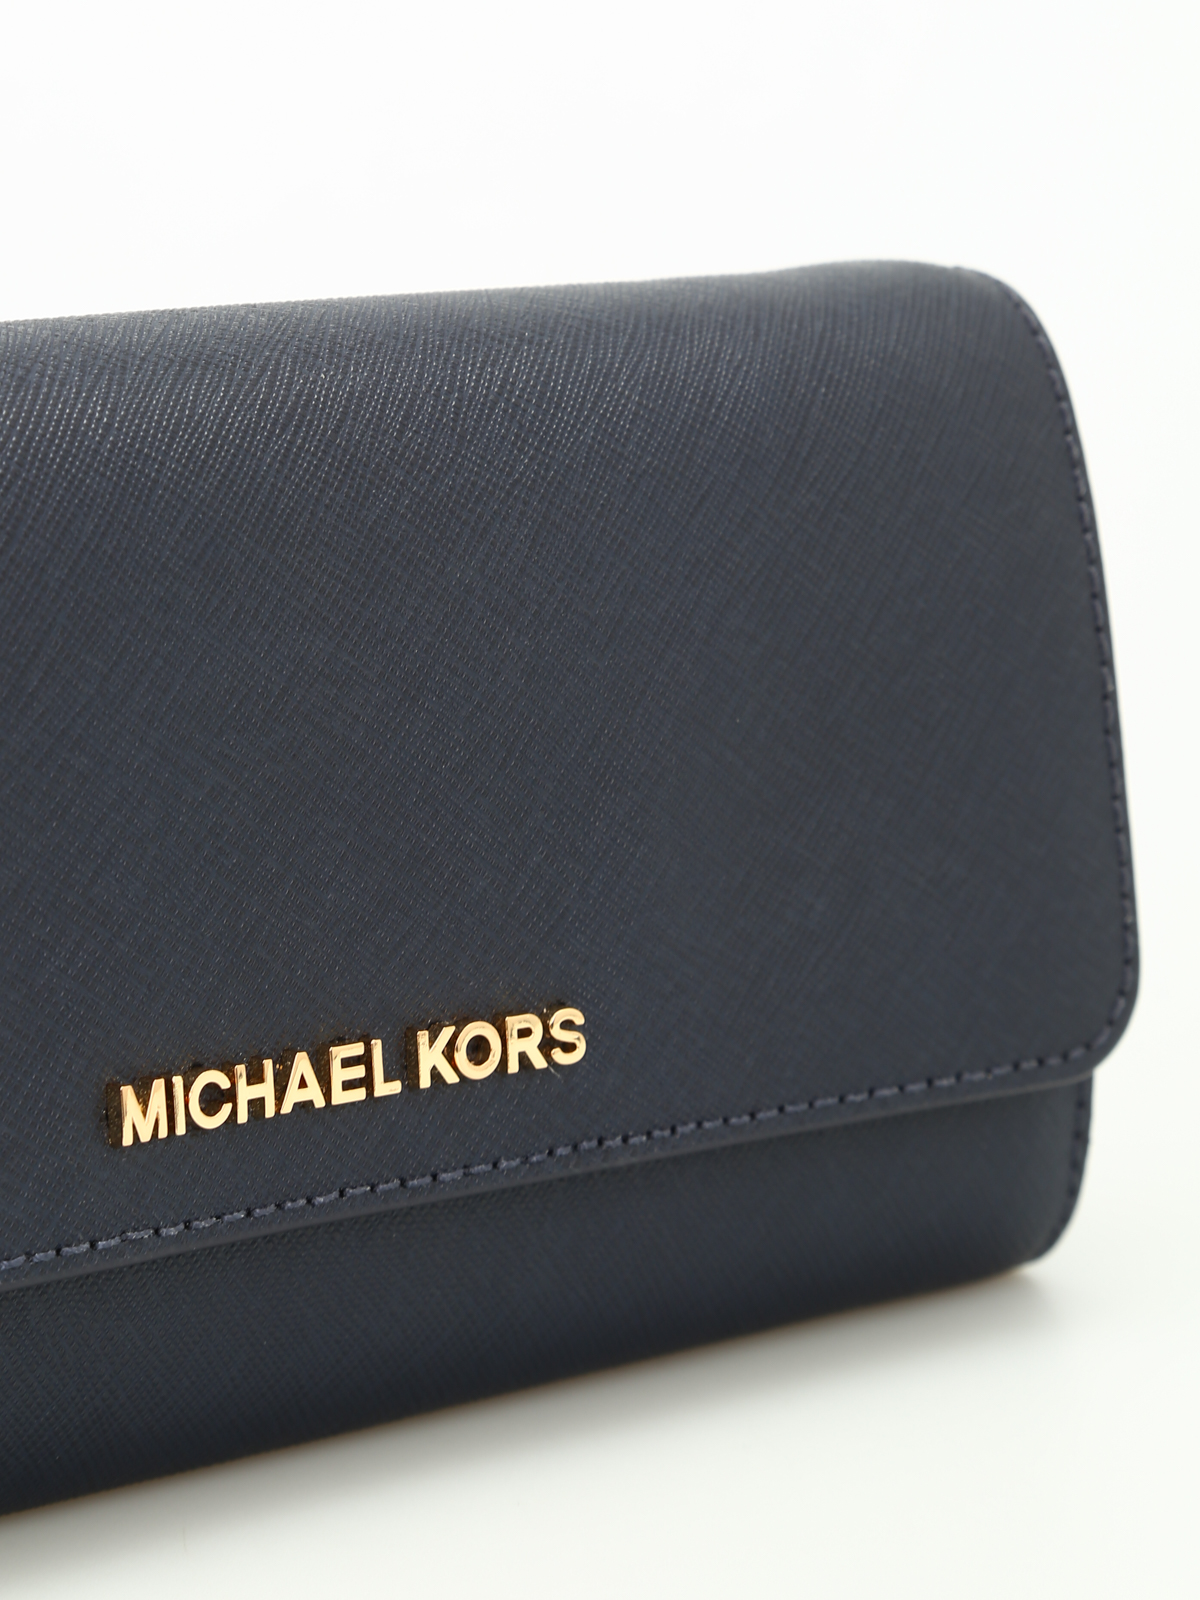 Michael Kors - Jet Set Travel leather 